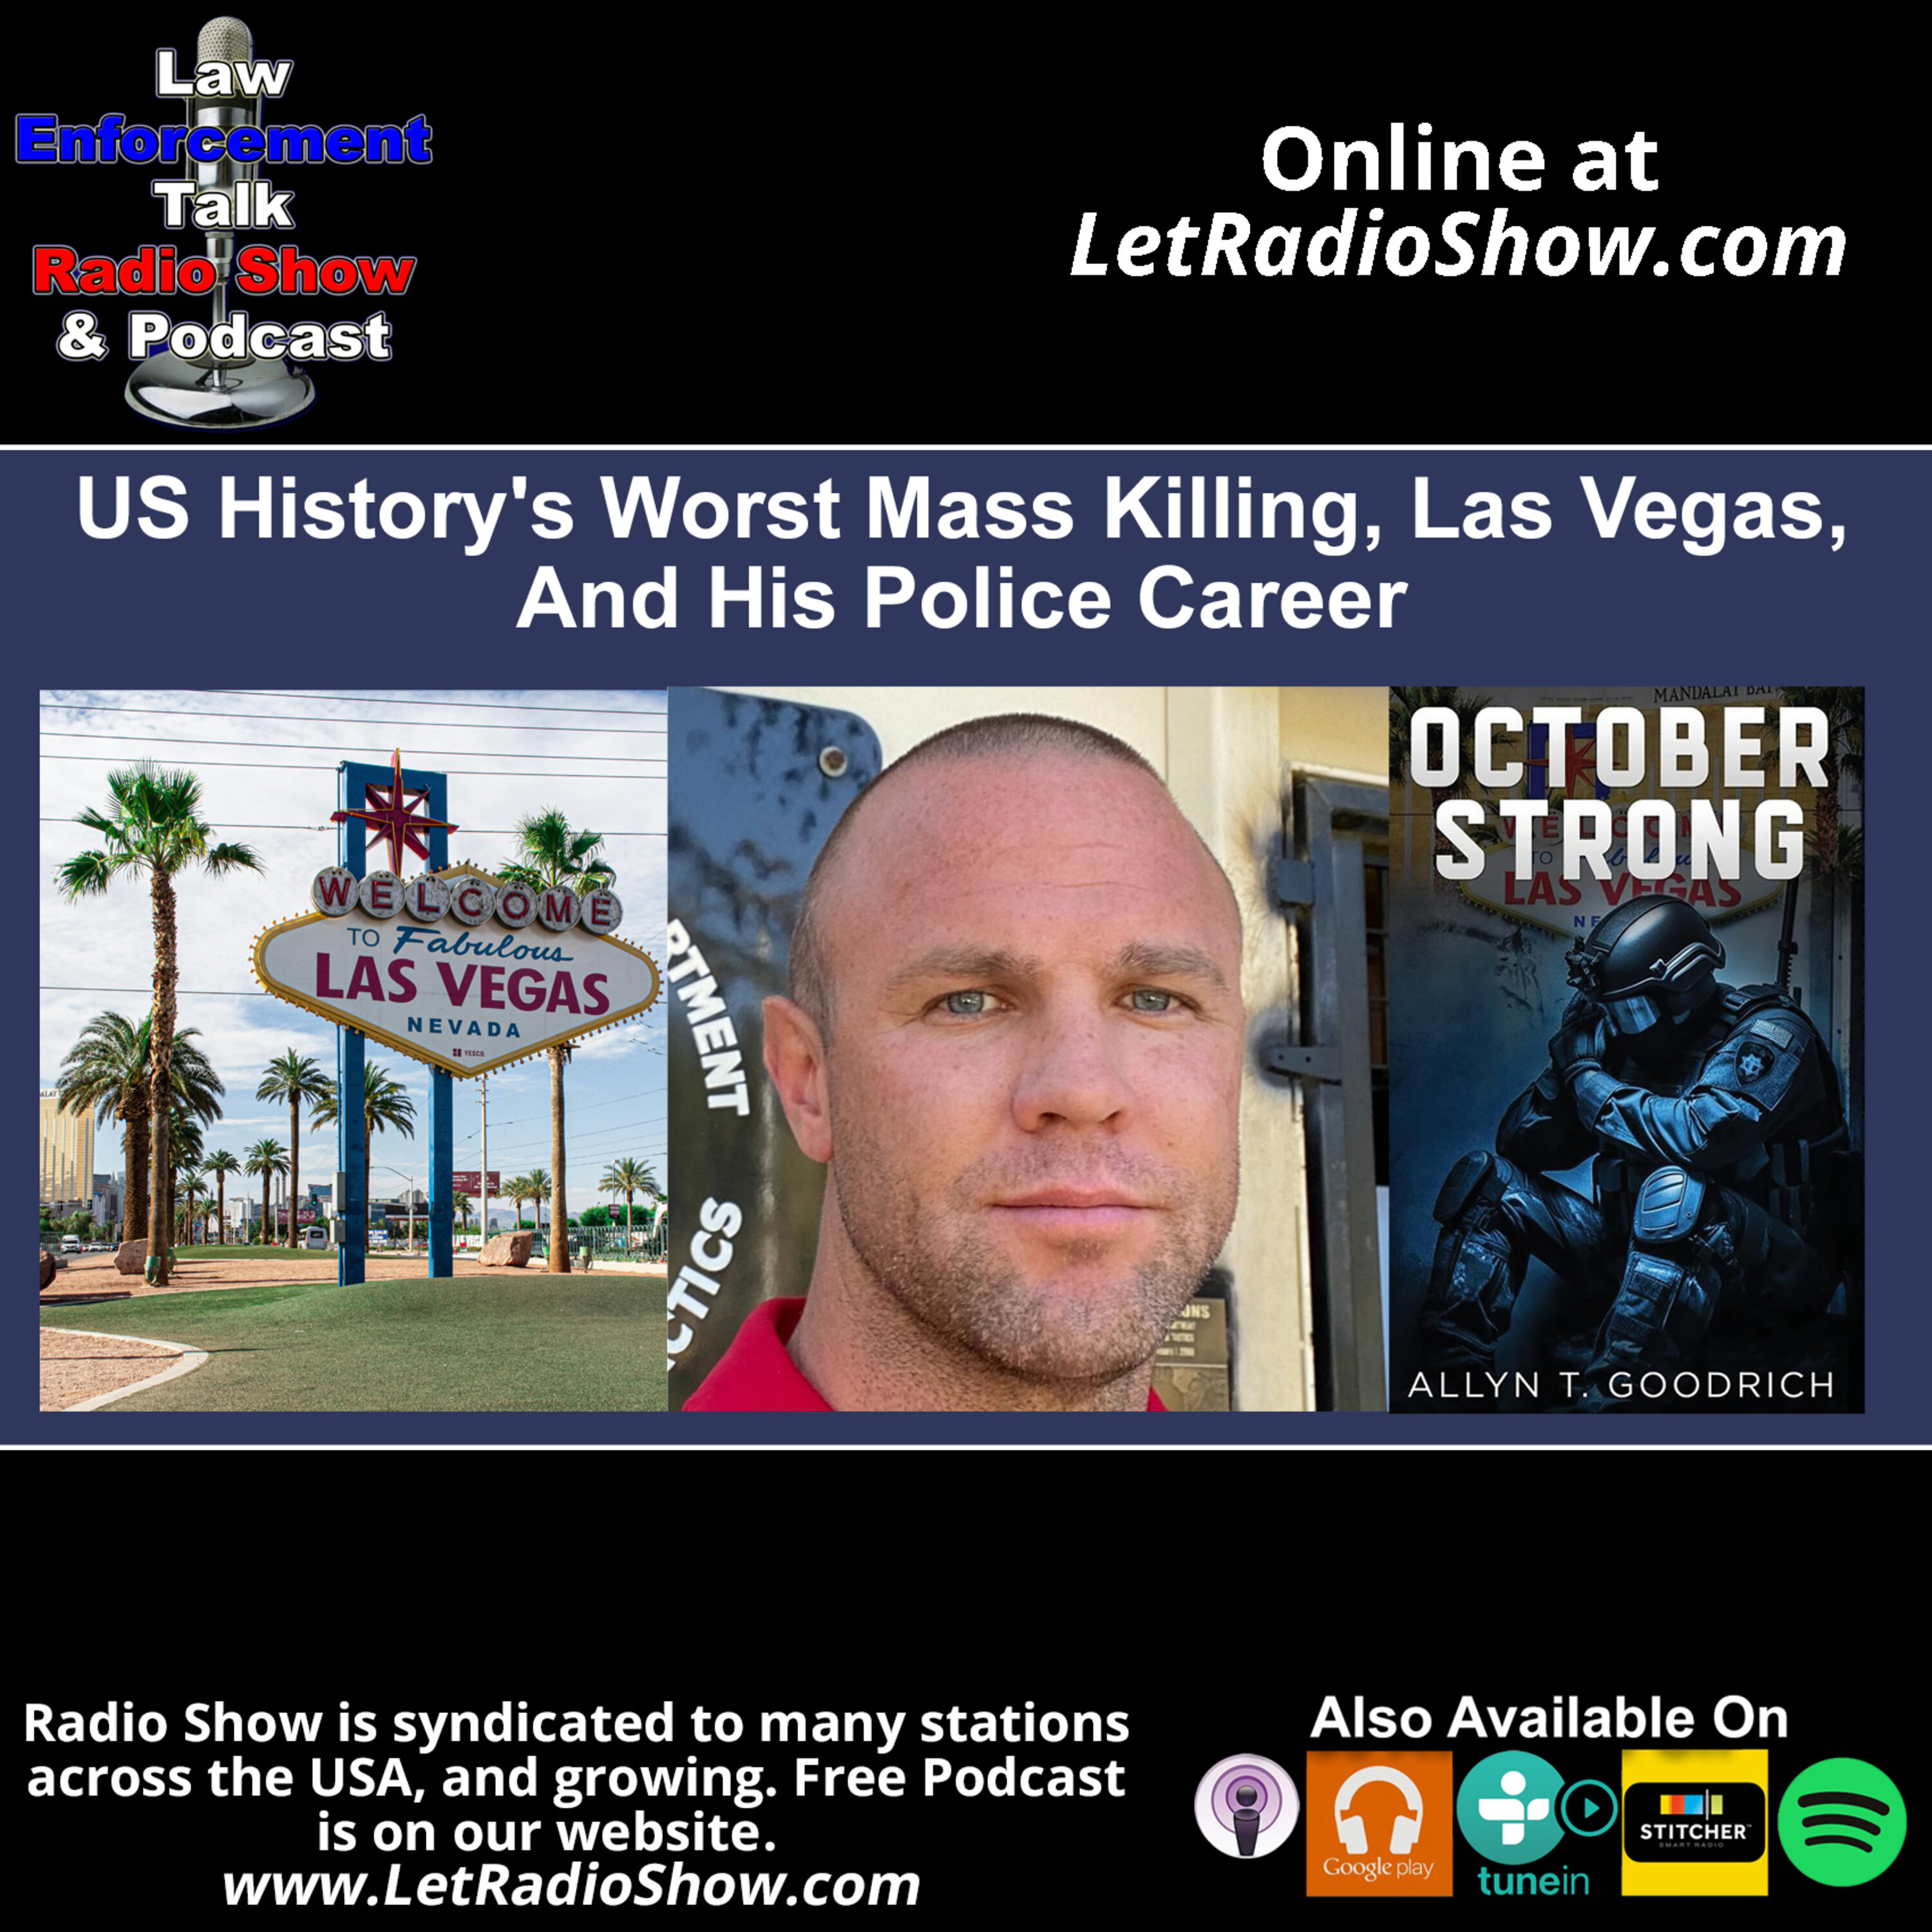 US History’s Worst Mass Killing, Las Vegas, His Police Career.